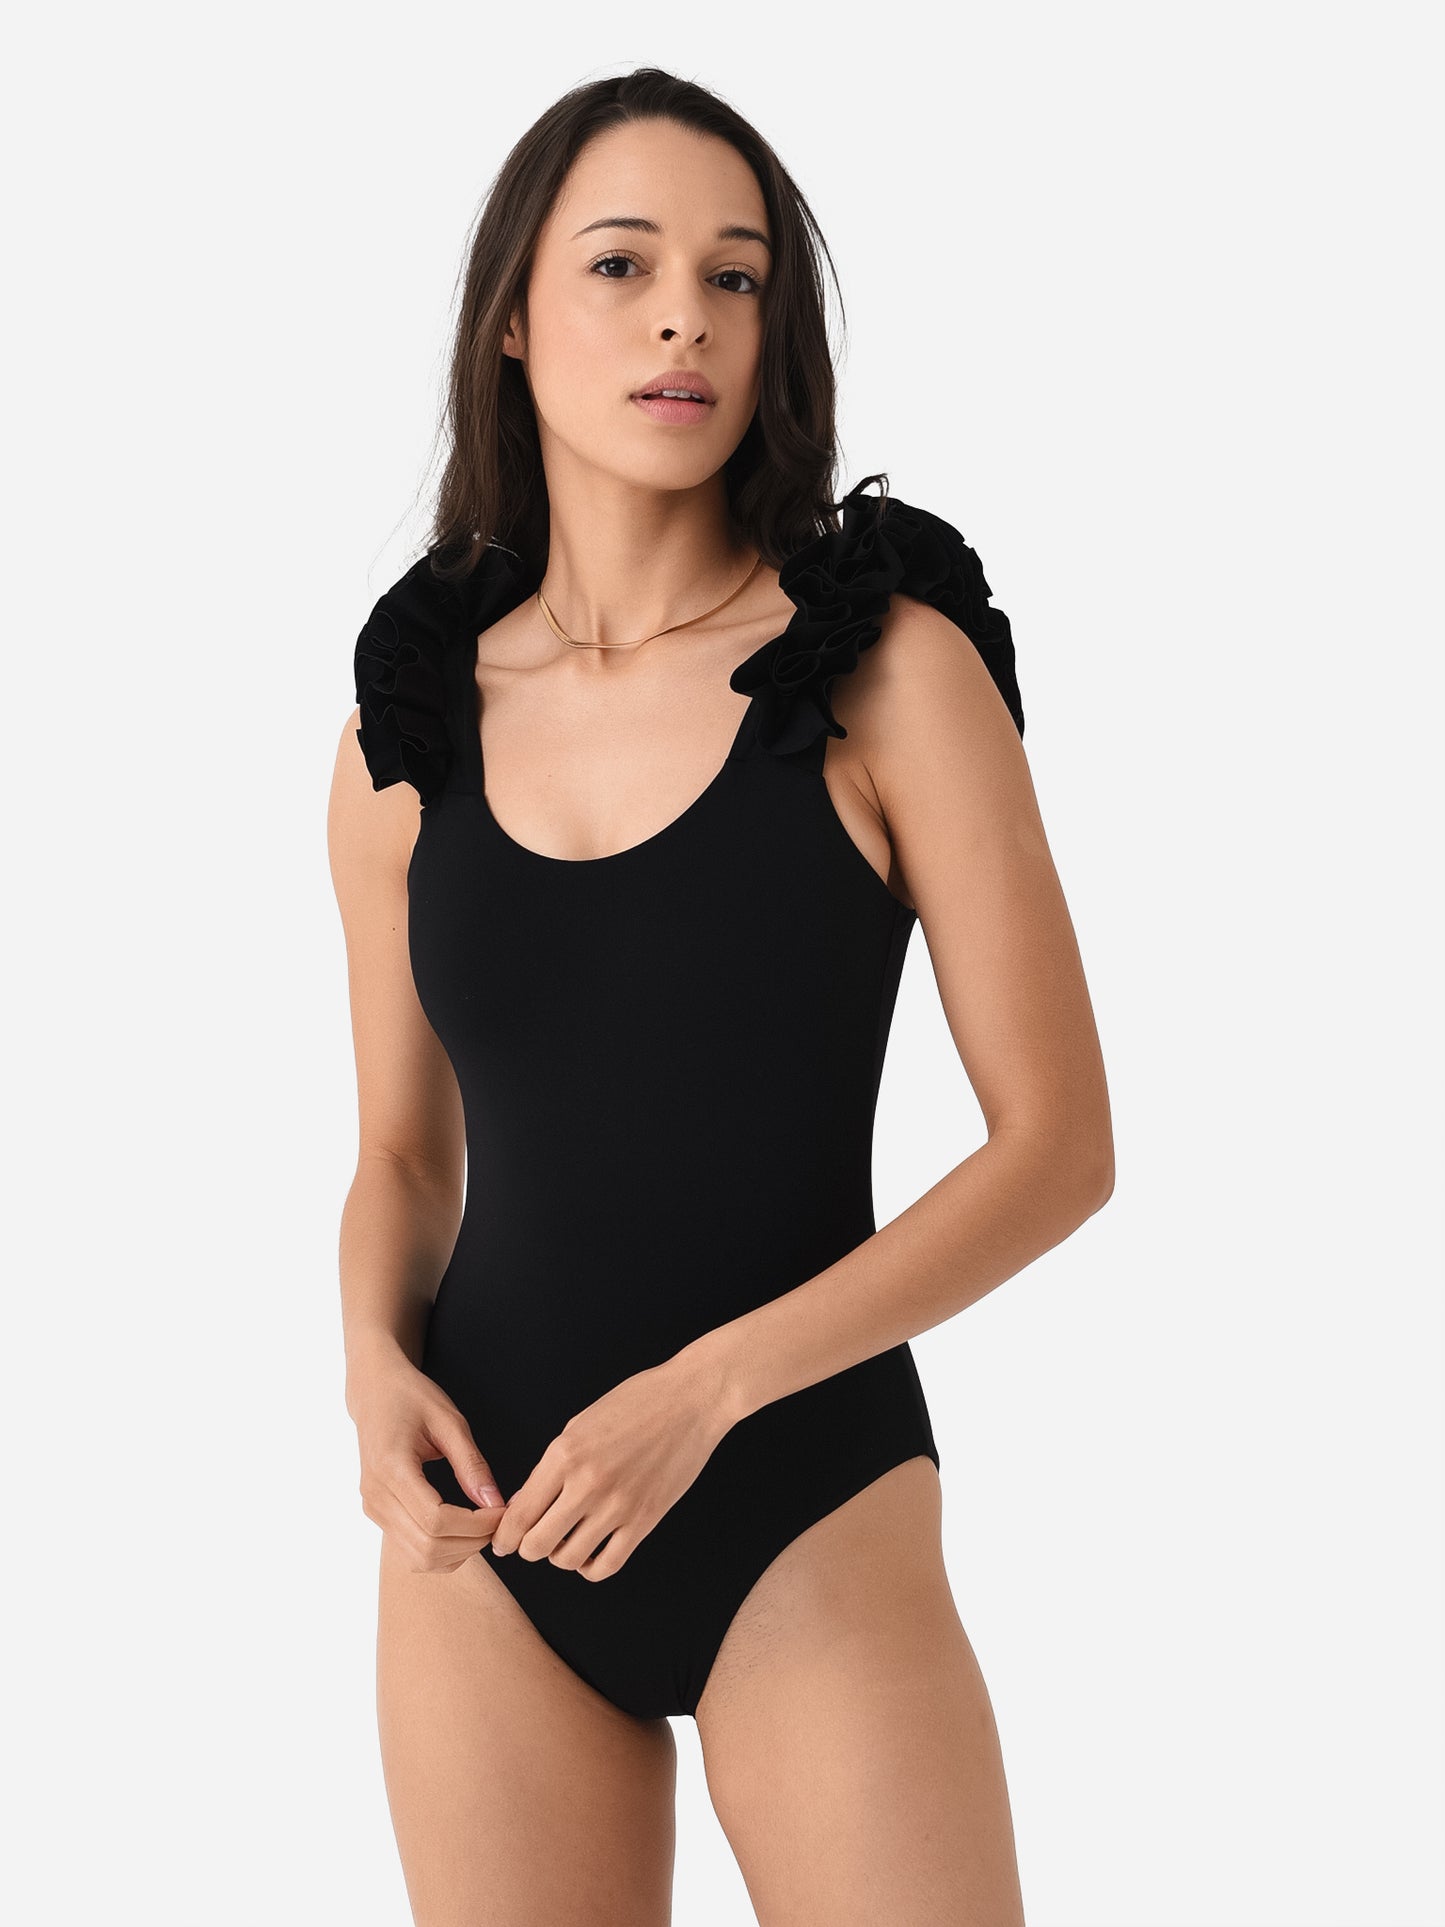 Maygel Coronel Women's Nayades One-Piece Swimsuit